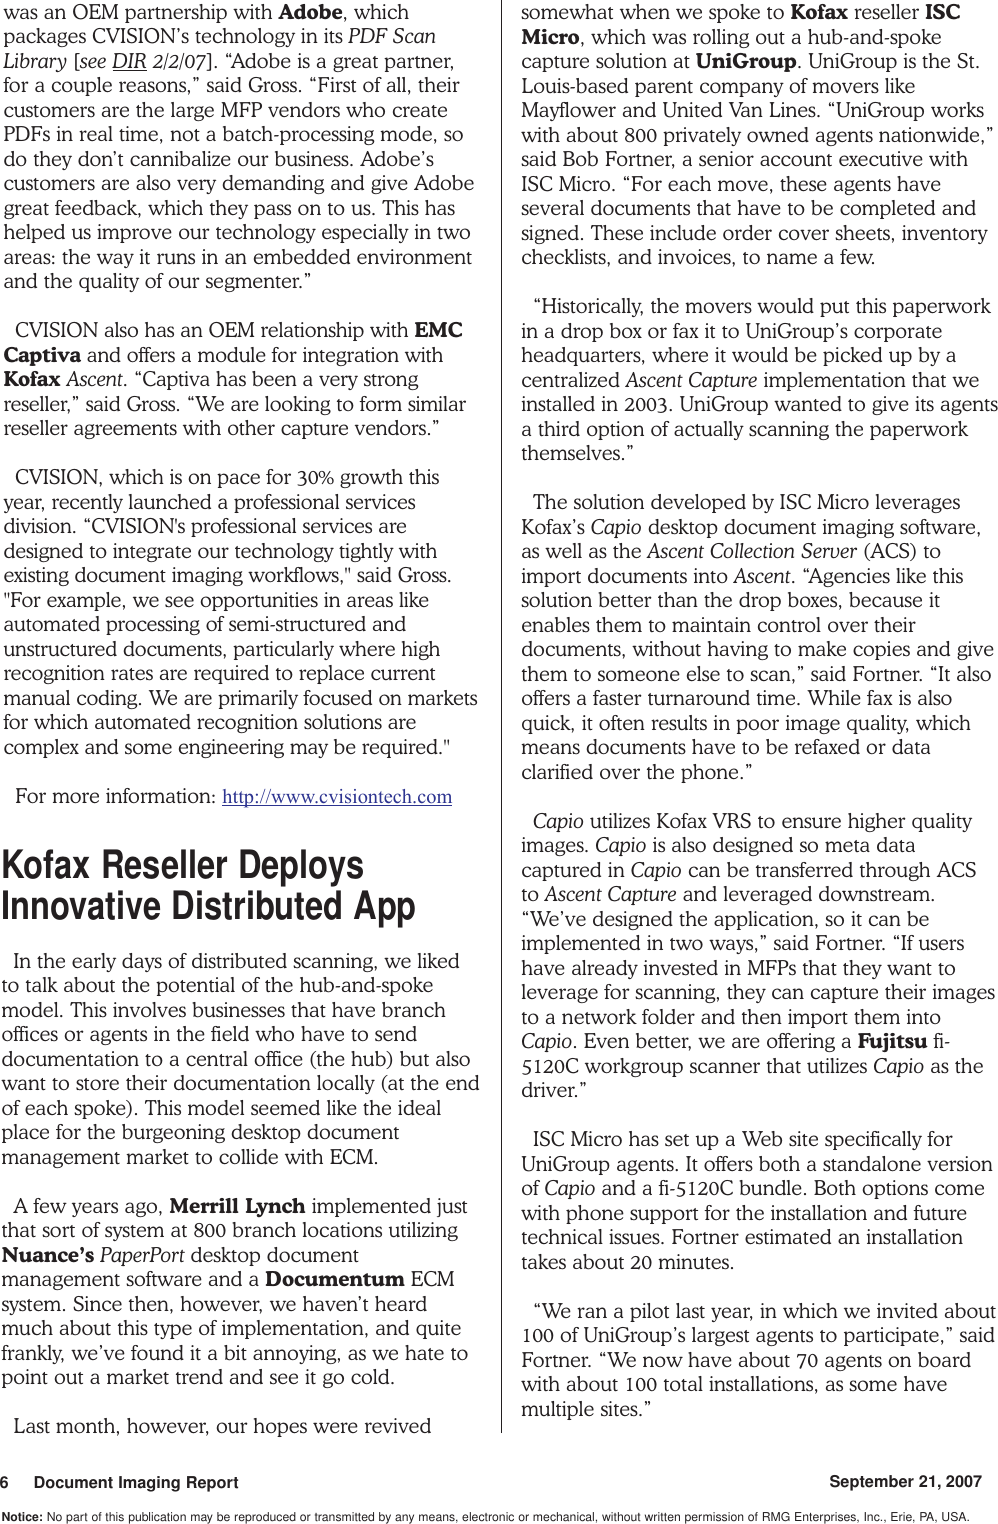 Page 6 of 8 - Fujitsu DIR 9-21-07 FCPA Upgrades Dept. Scanner Dir-092107 Review